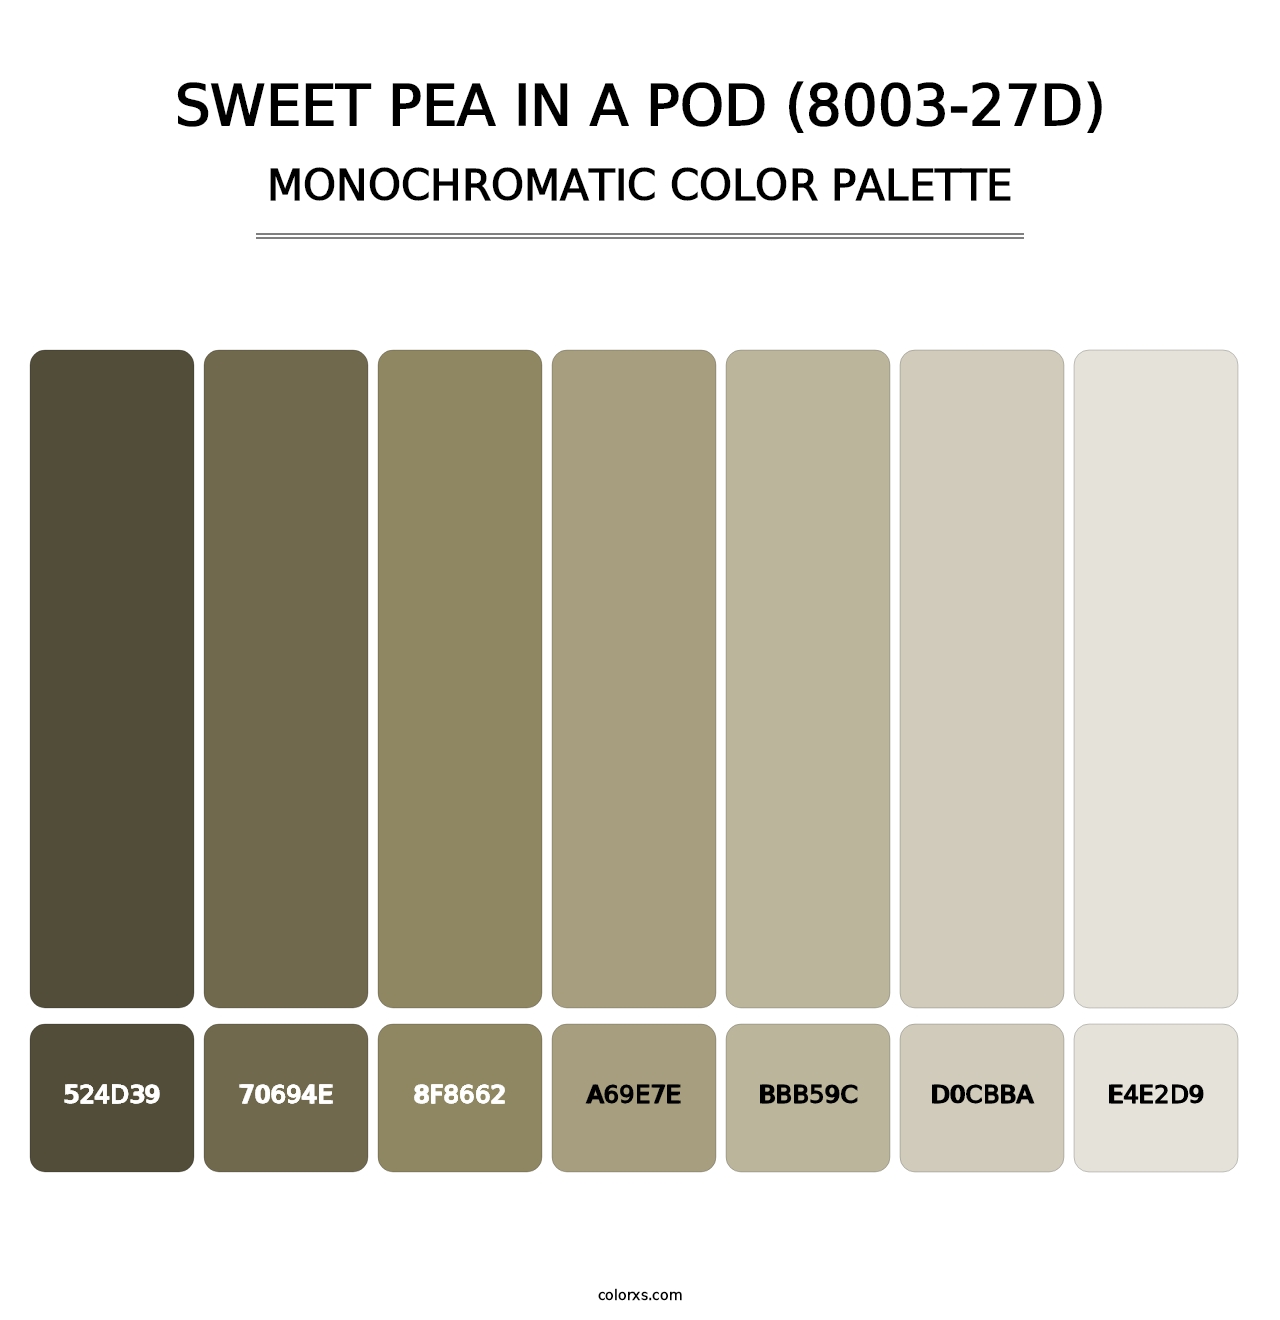 Sweet Pea in a Pod (8003-27D) - Monochromatic Color Palette